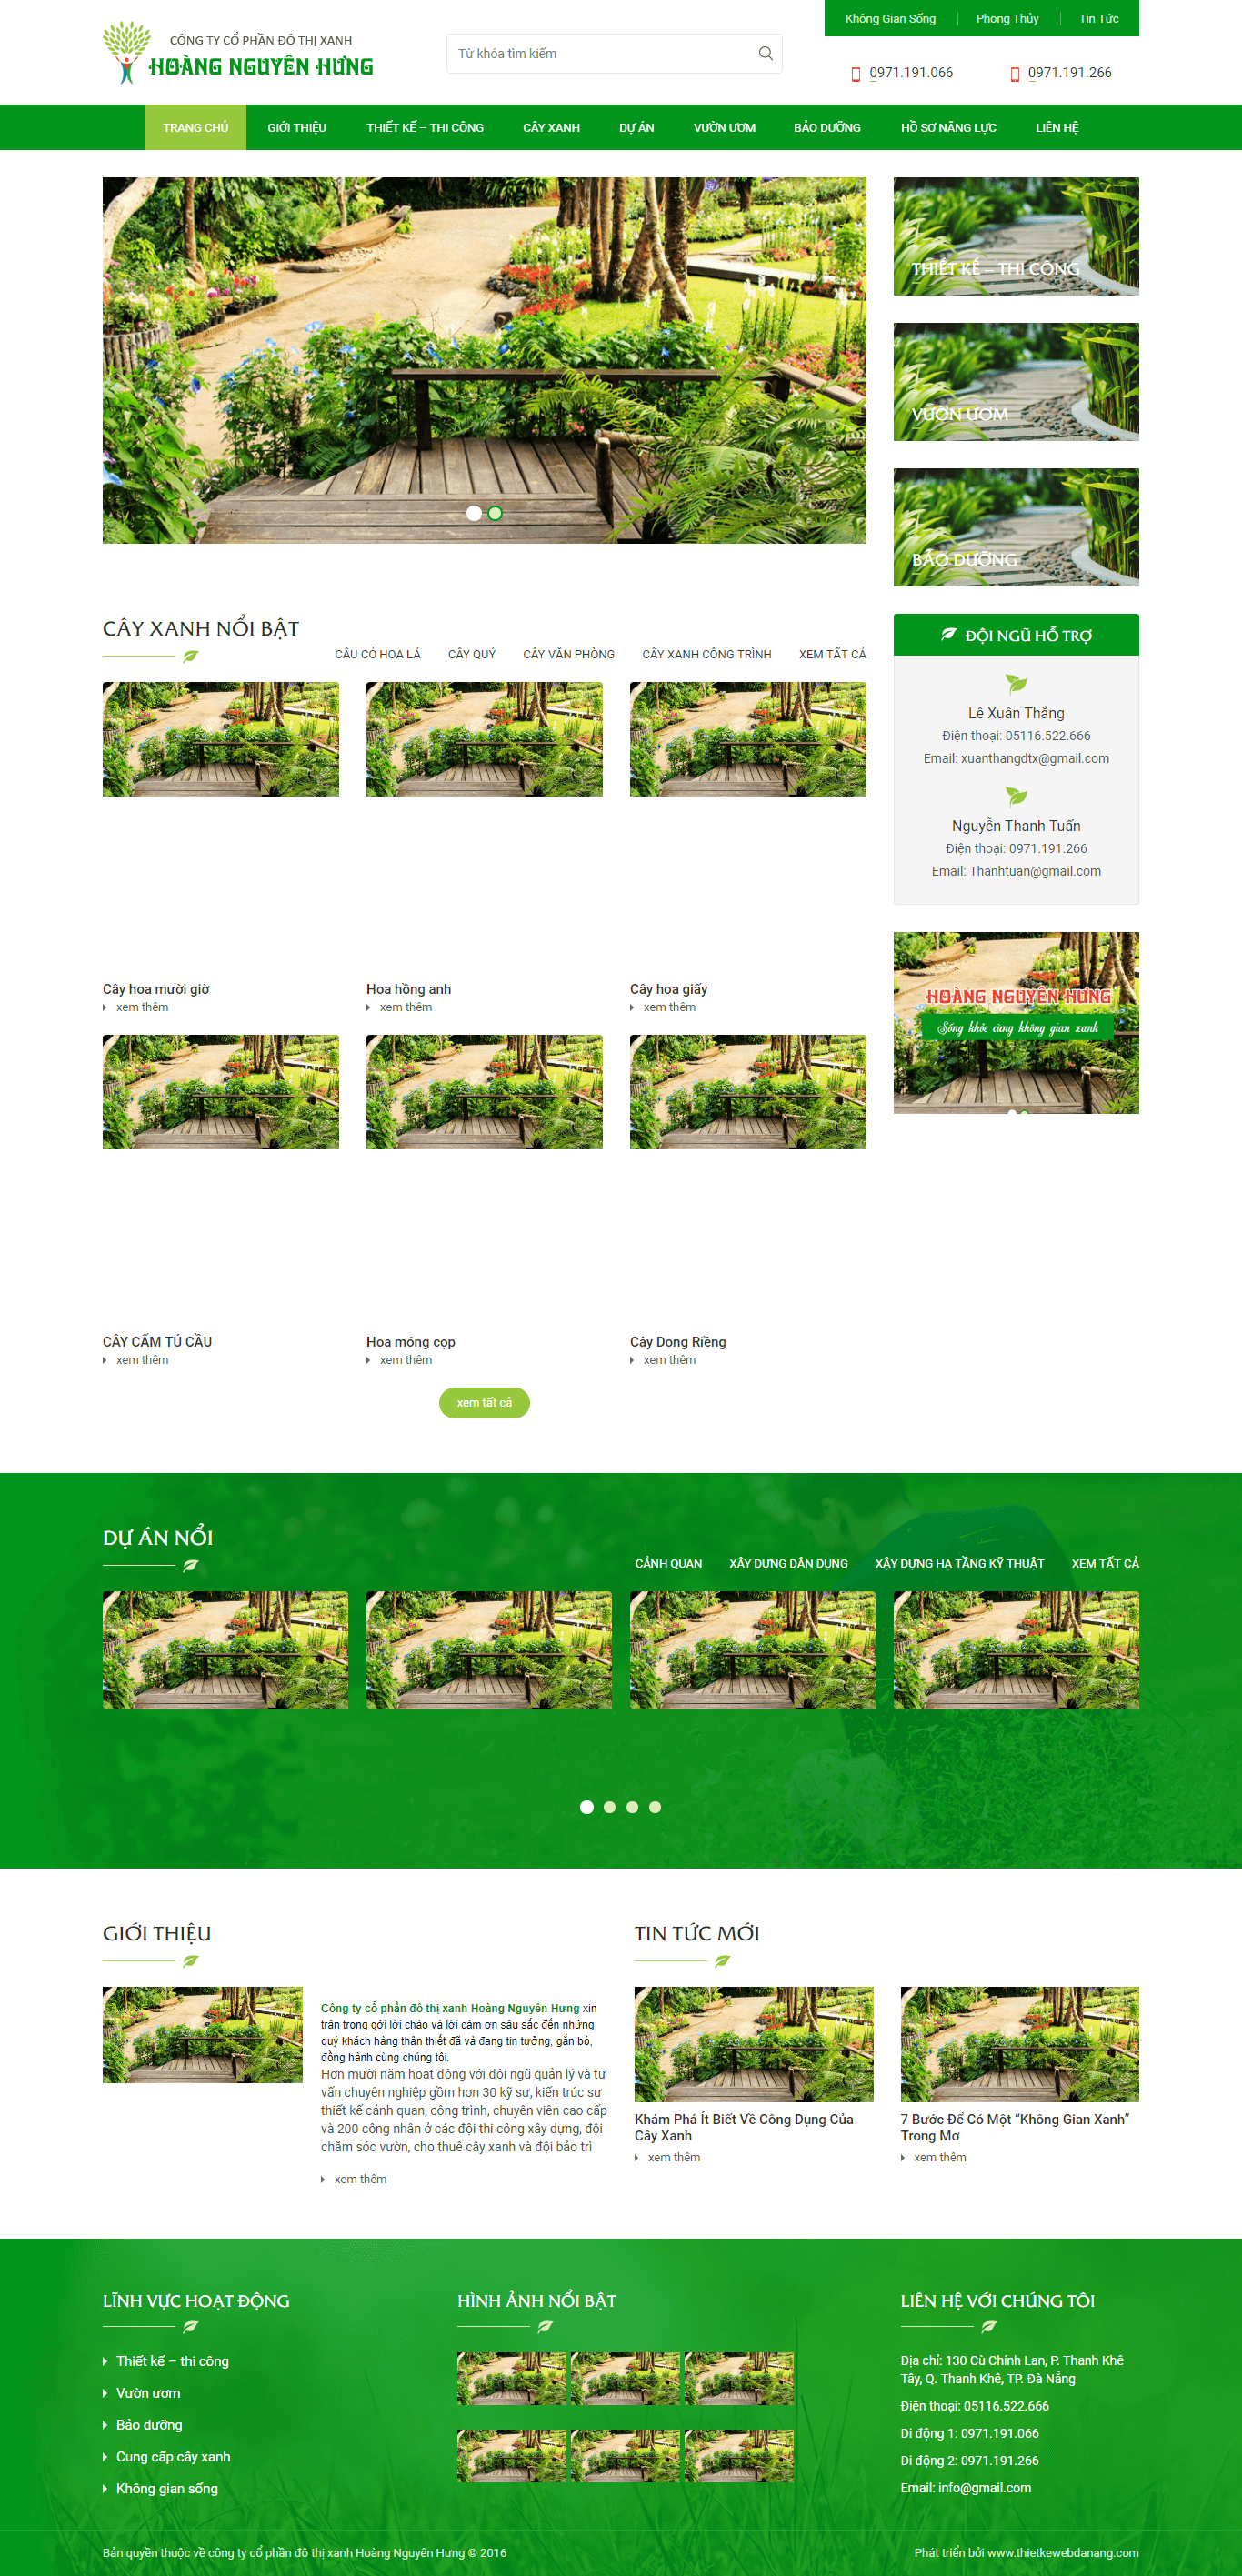 Website Bán Cây Cảnh